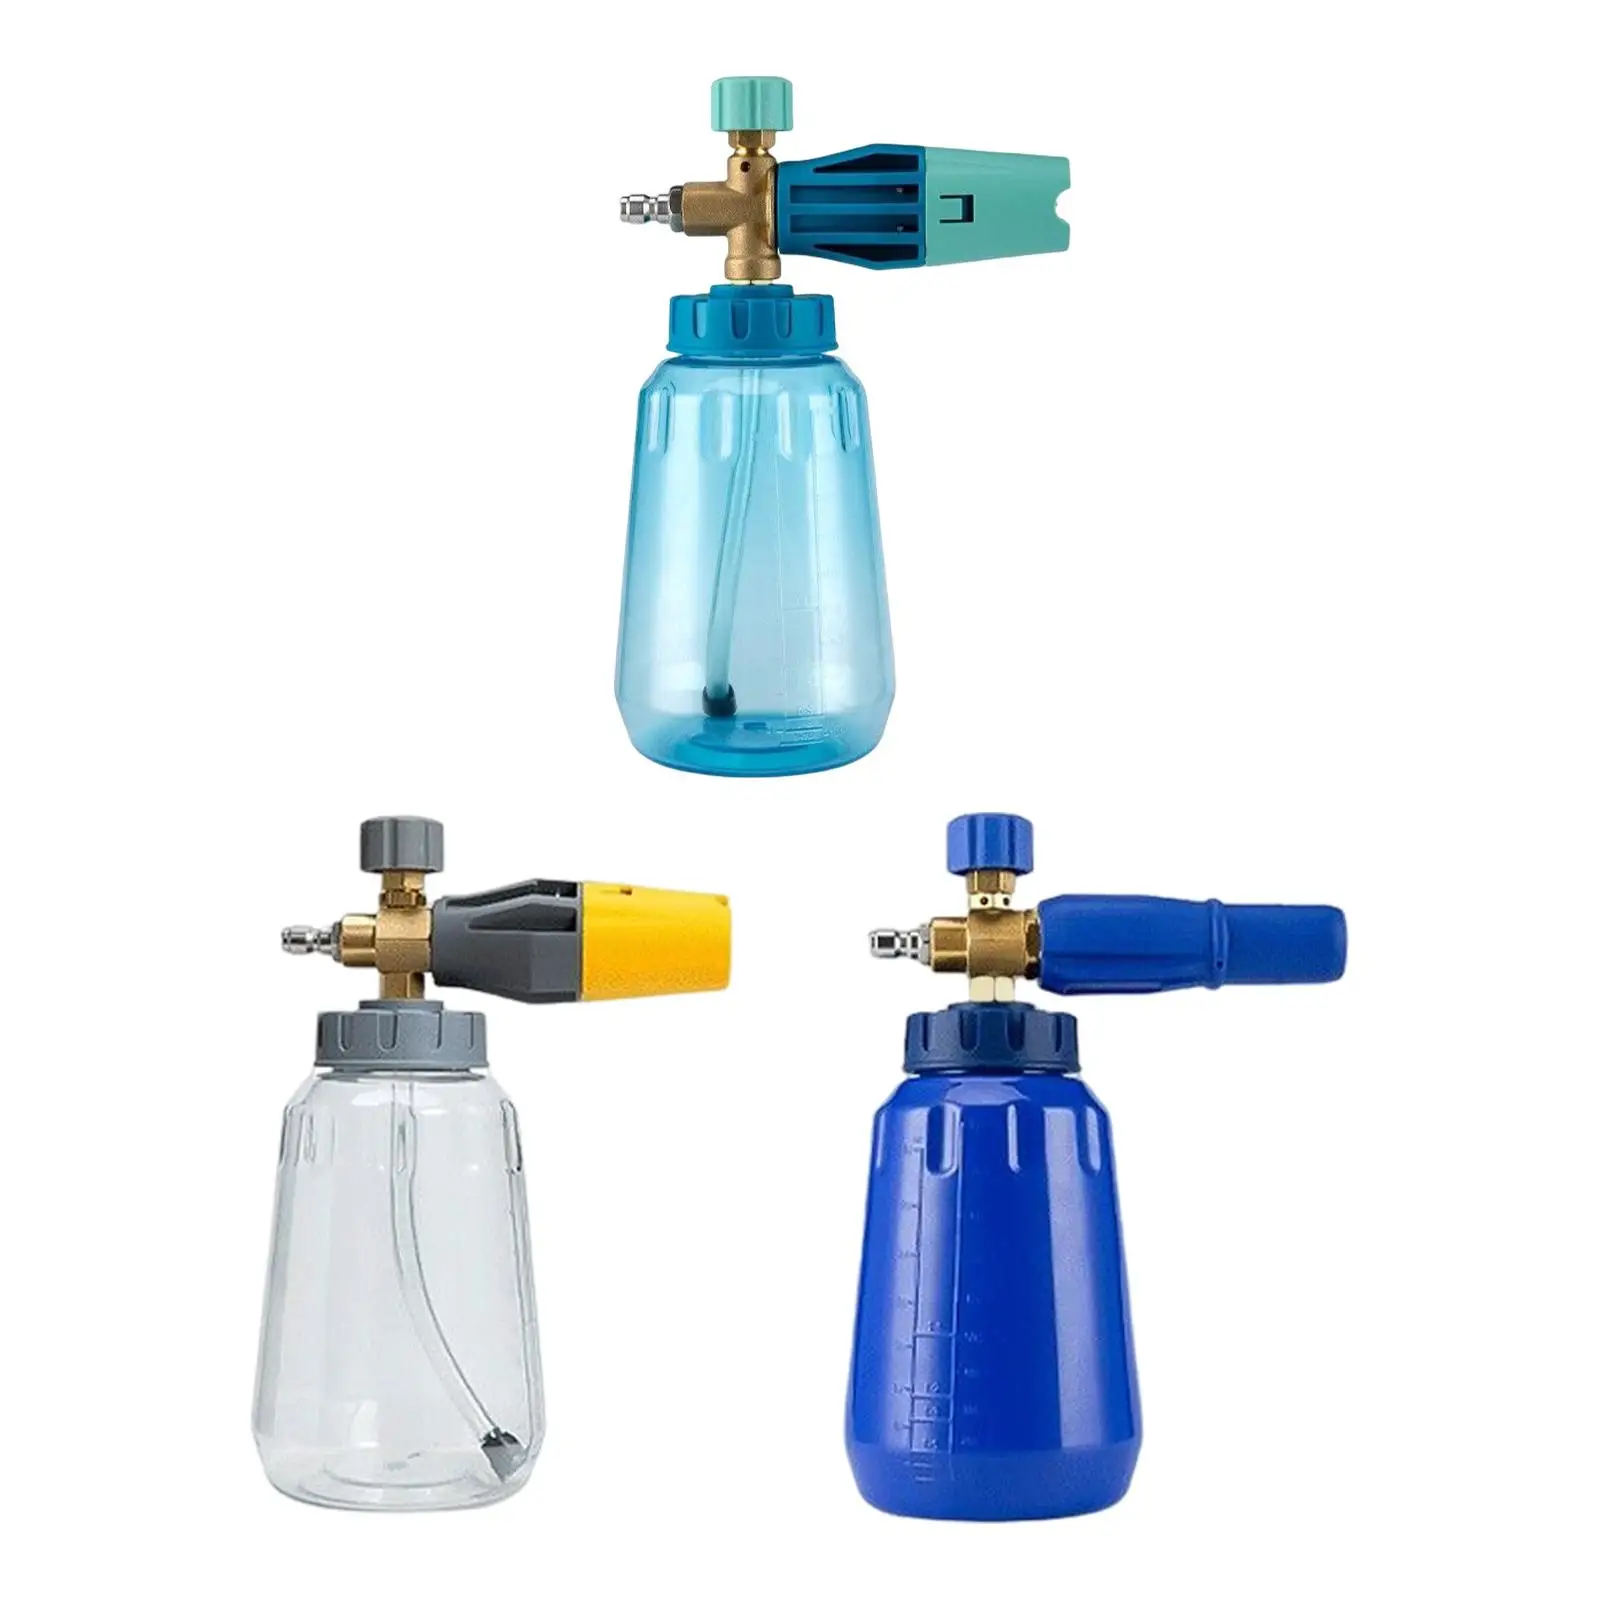 

Portable Foaming Sprayer, Water Sprayer Soap Sprayer 1L Foam Watering Can High